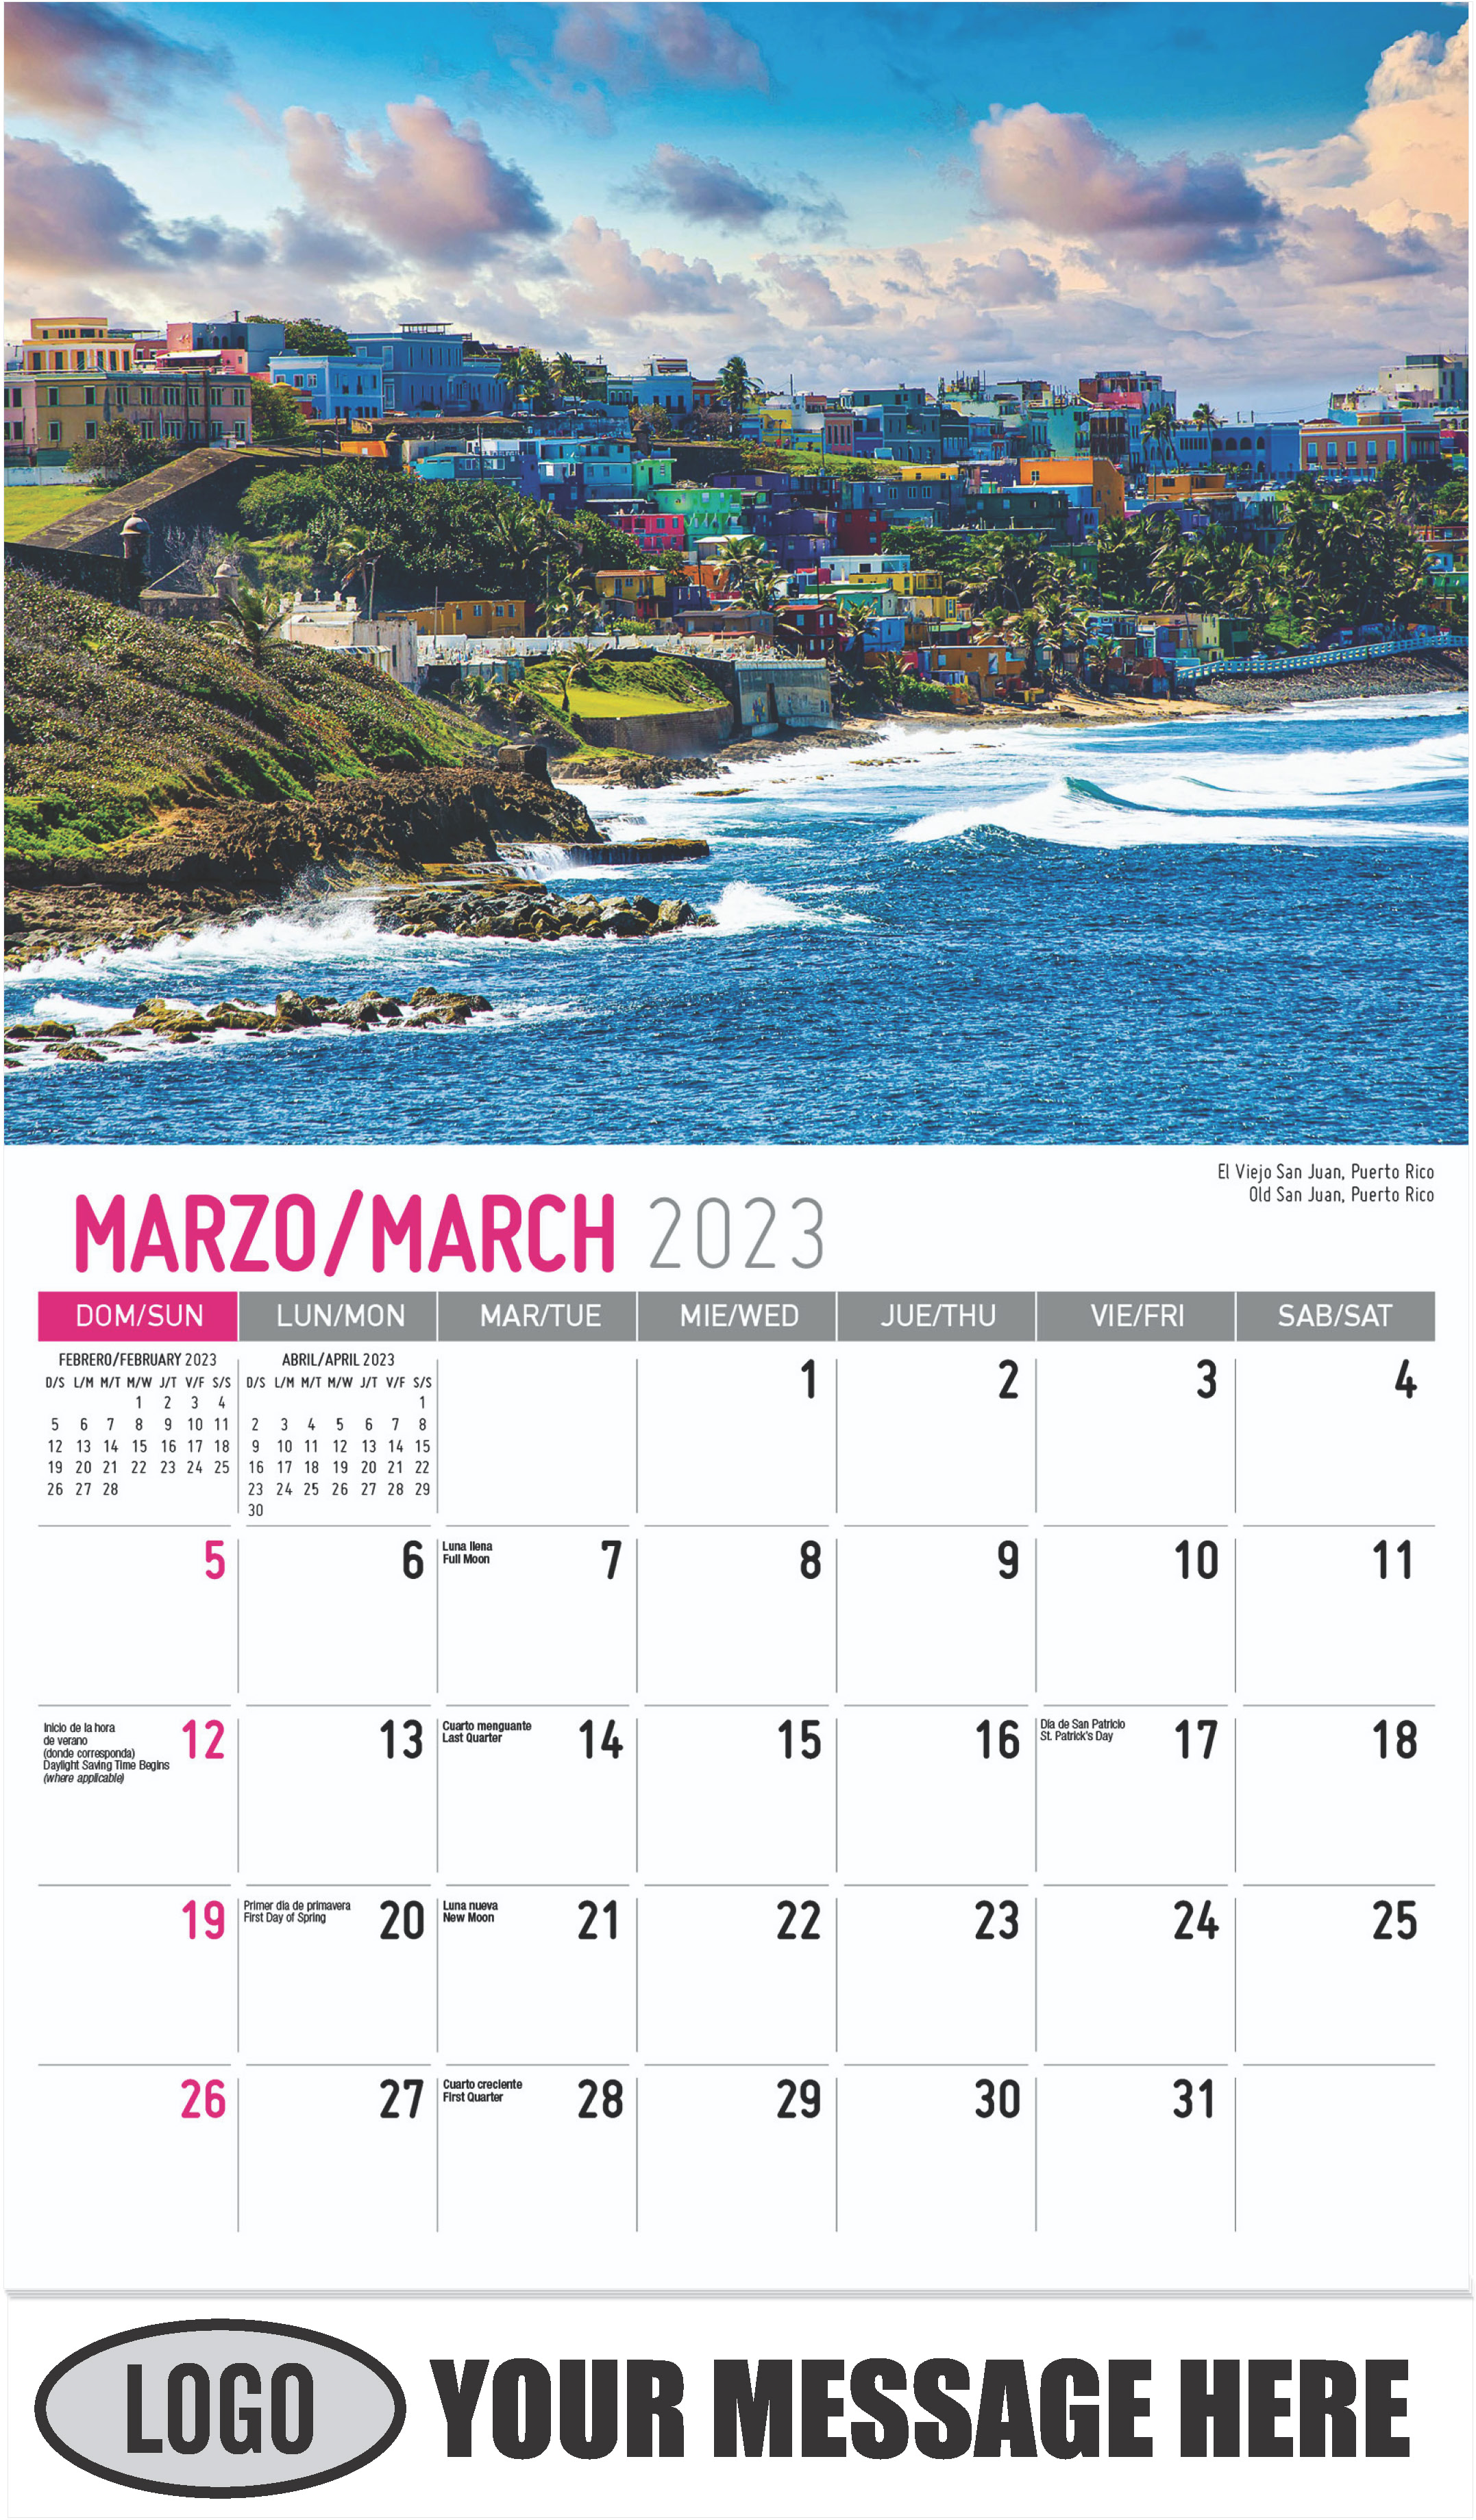 Old San Juan, Puerto Rico - March - Beauty of Latin America 2023 Promotional Calendar